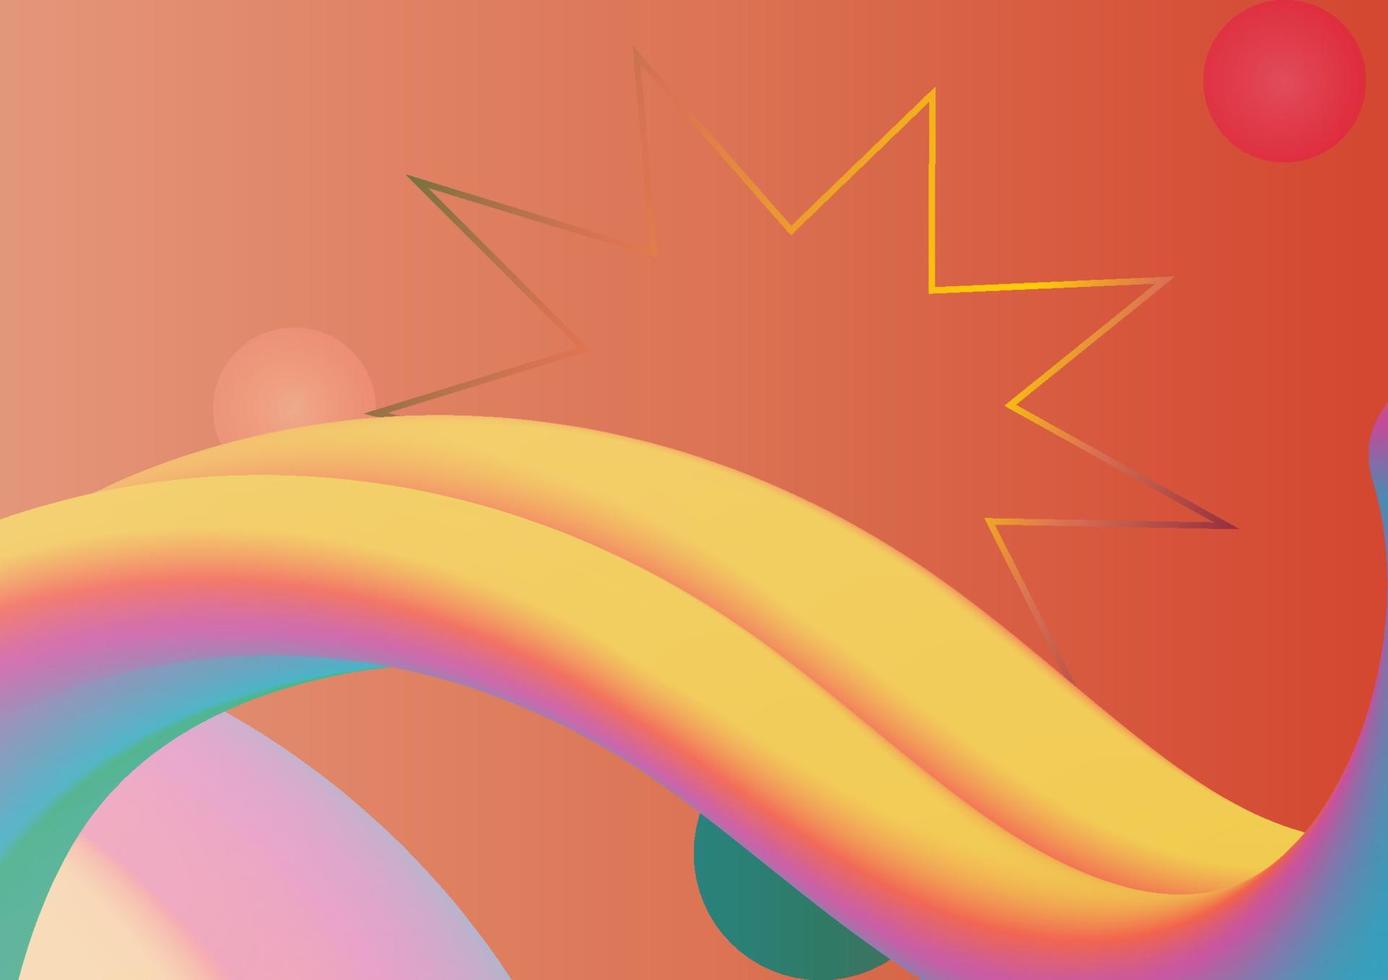 Sommersaison Festival abstrakte Hintergrundfahne mehrfarbige Regenbogengrafikdesign-Tapetenhintergrund-Vektorillustration vektor